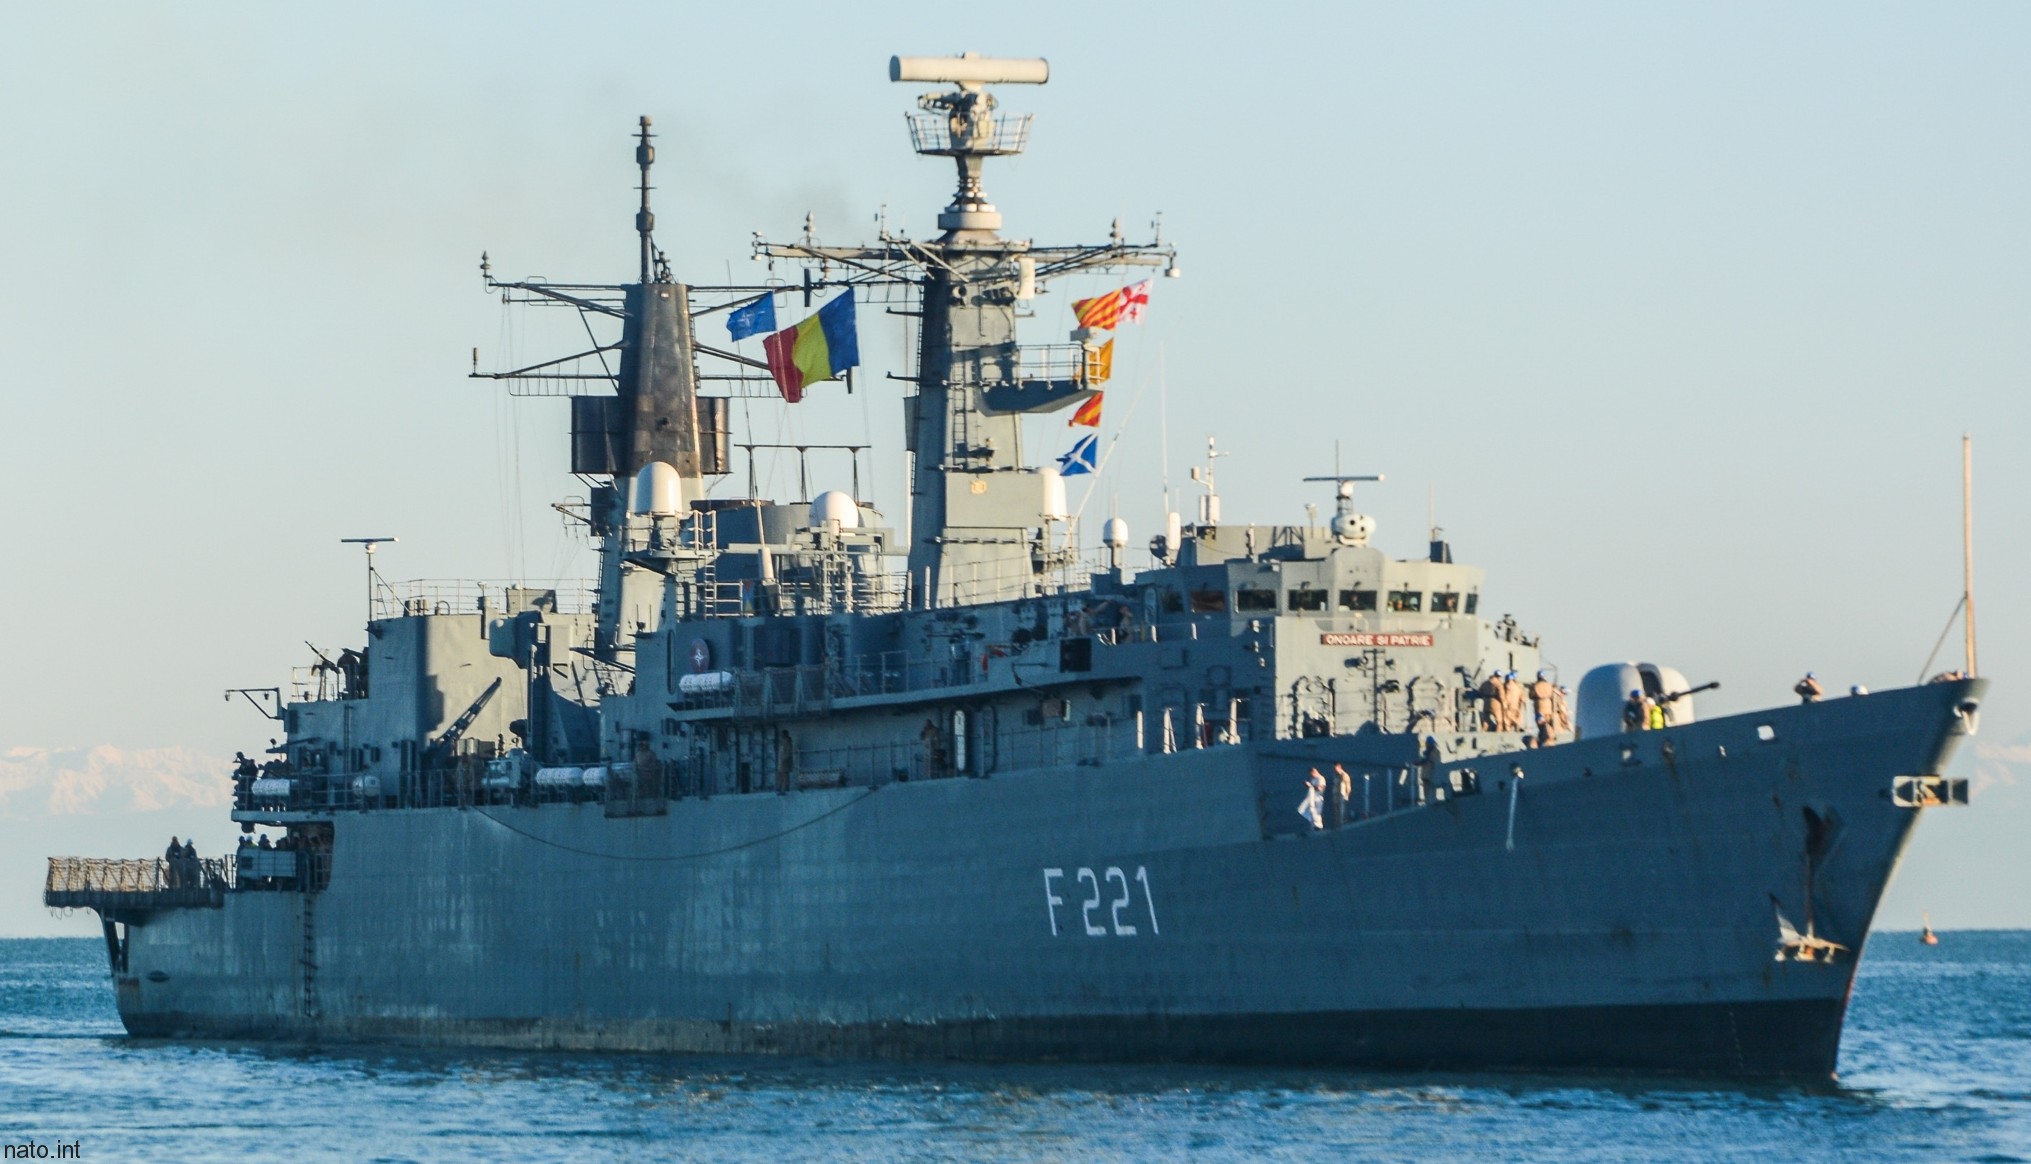 f-221 ros regele ferdinand frigate romanian navy type 22 broadsword class 18